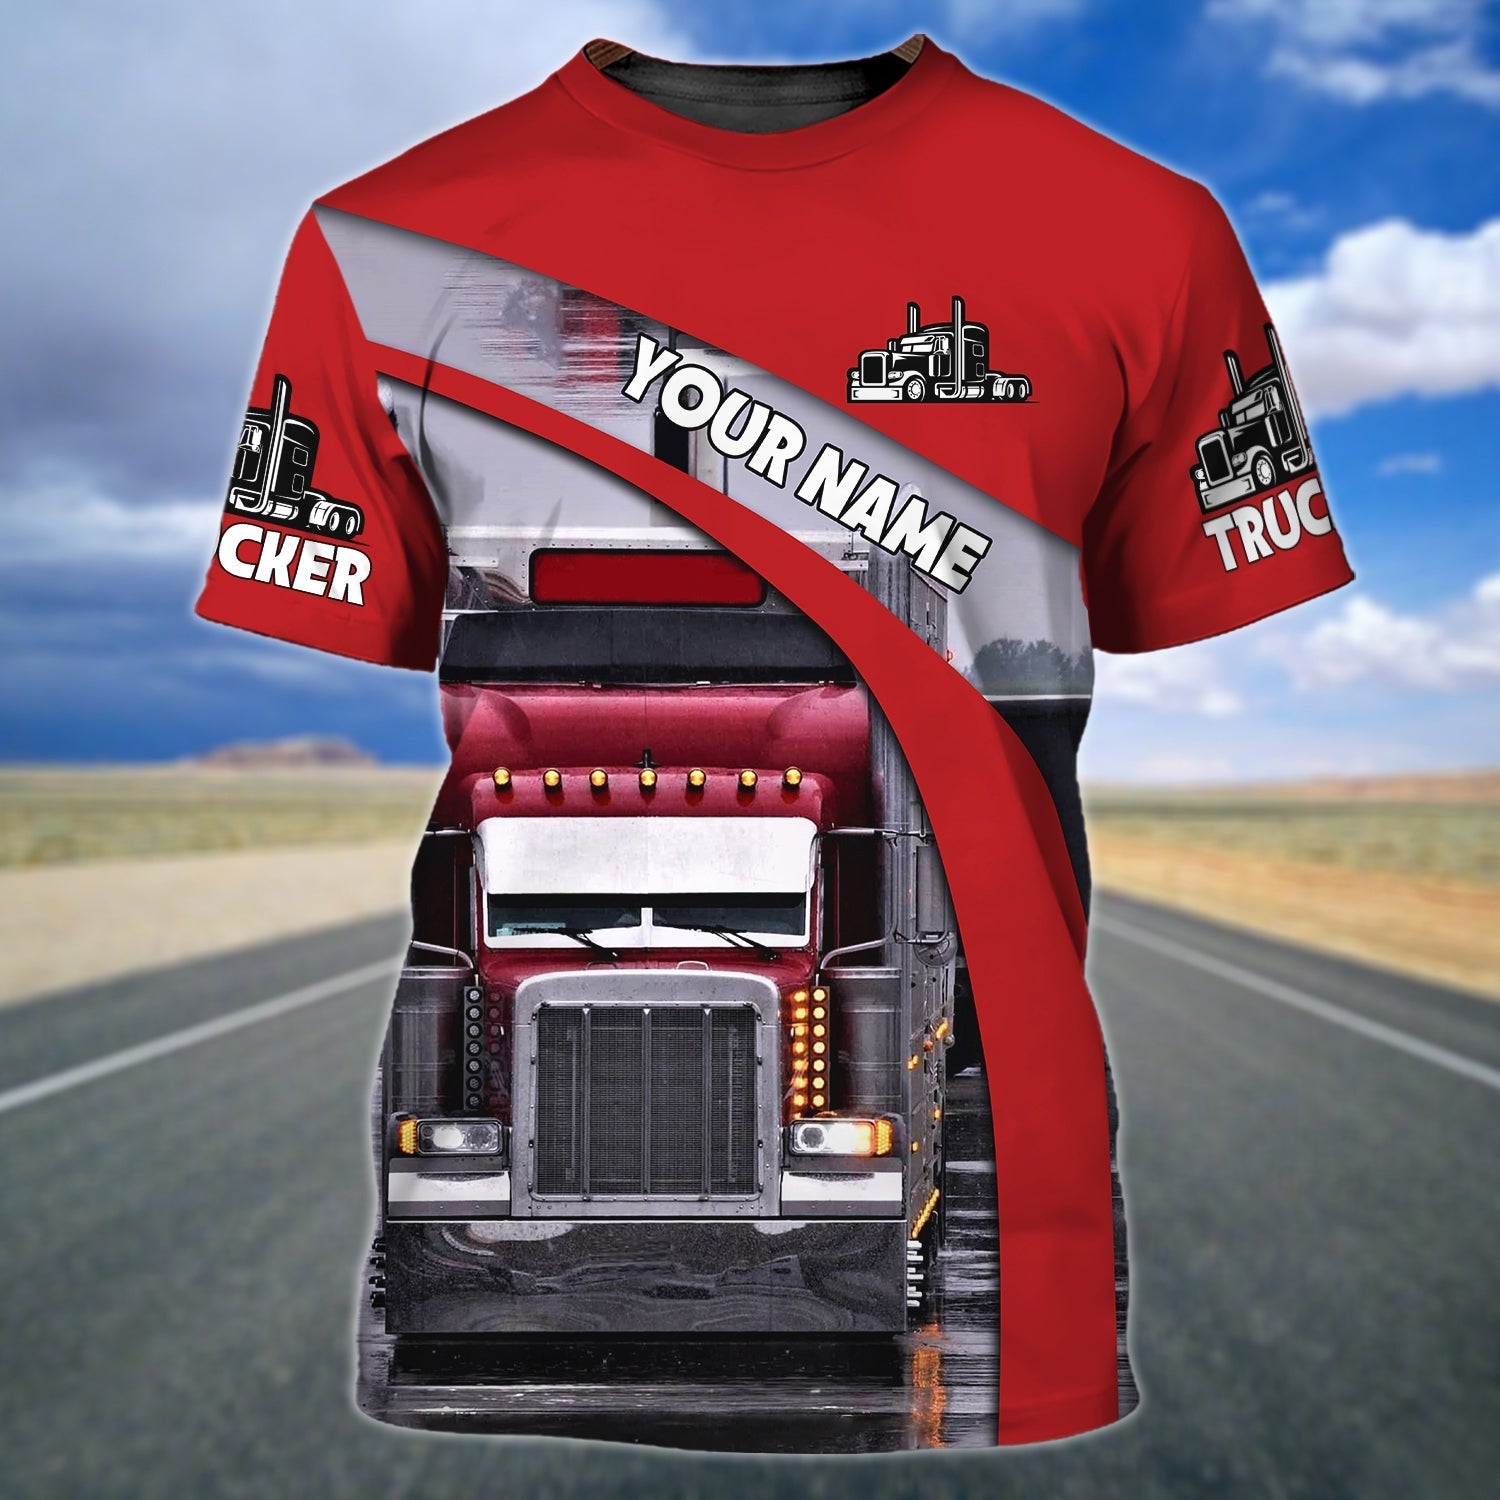 Customized Red Truck T Shirt Gift For Trucker Friend Trucker Day Present